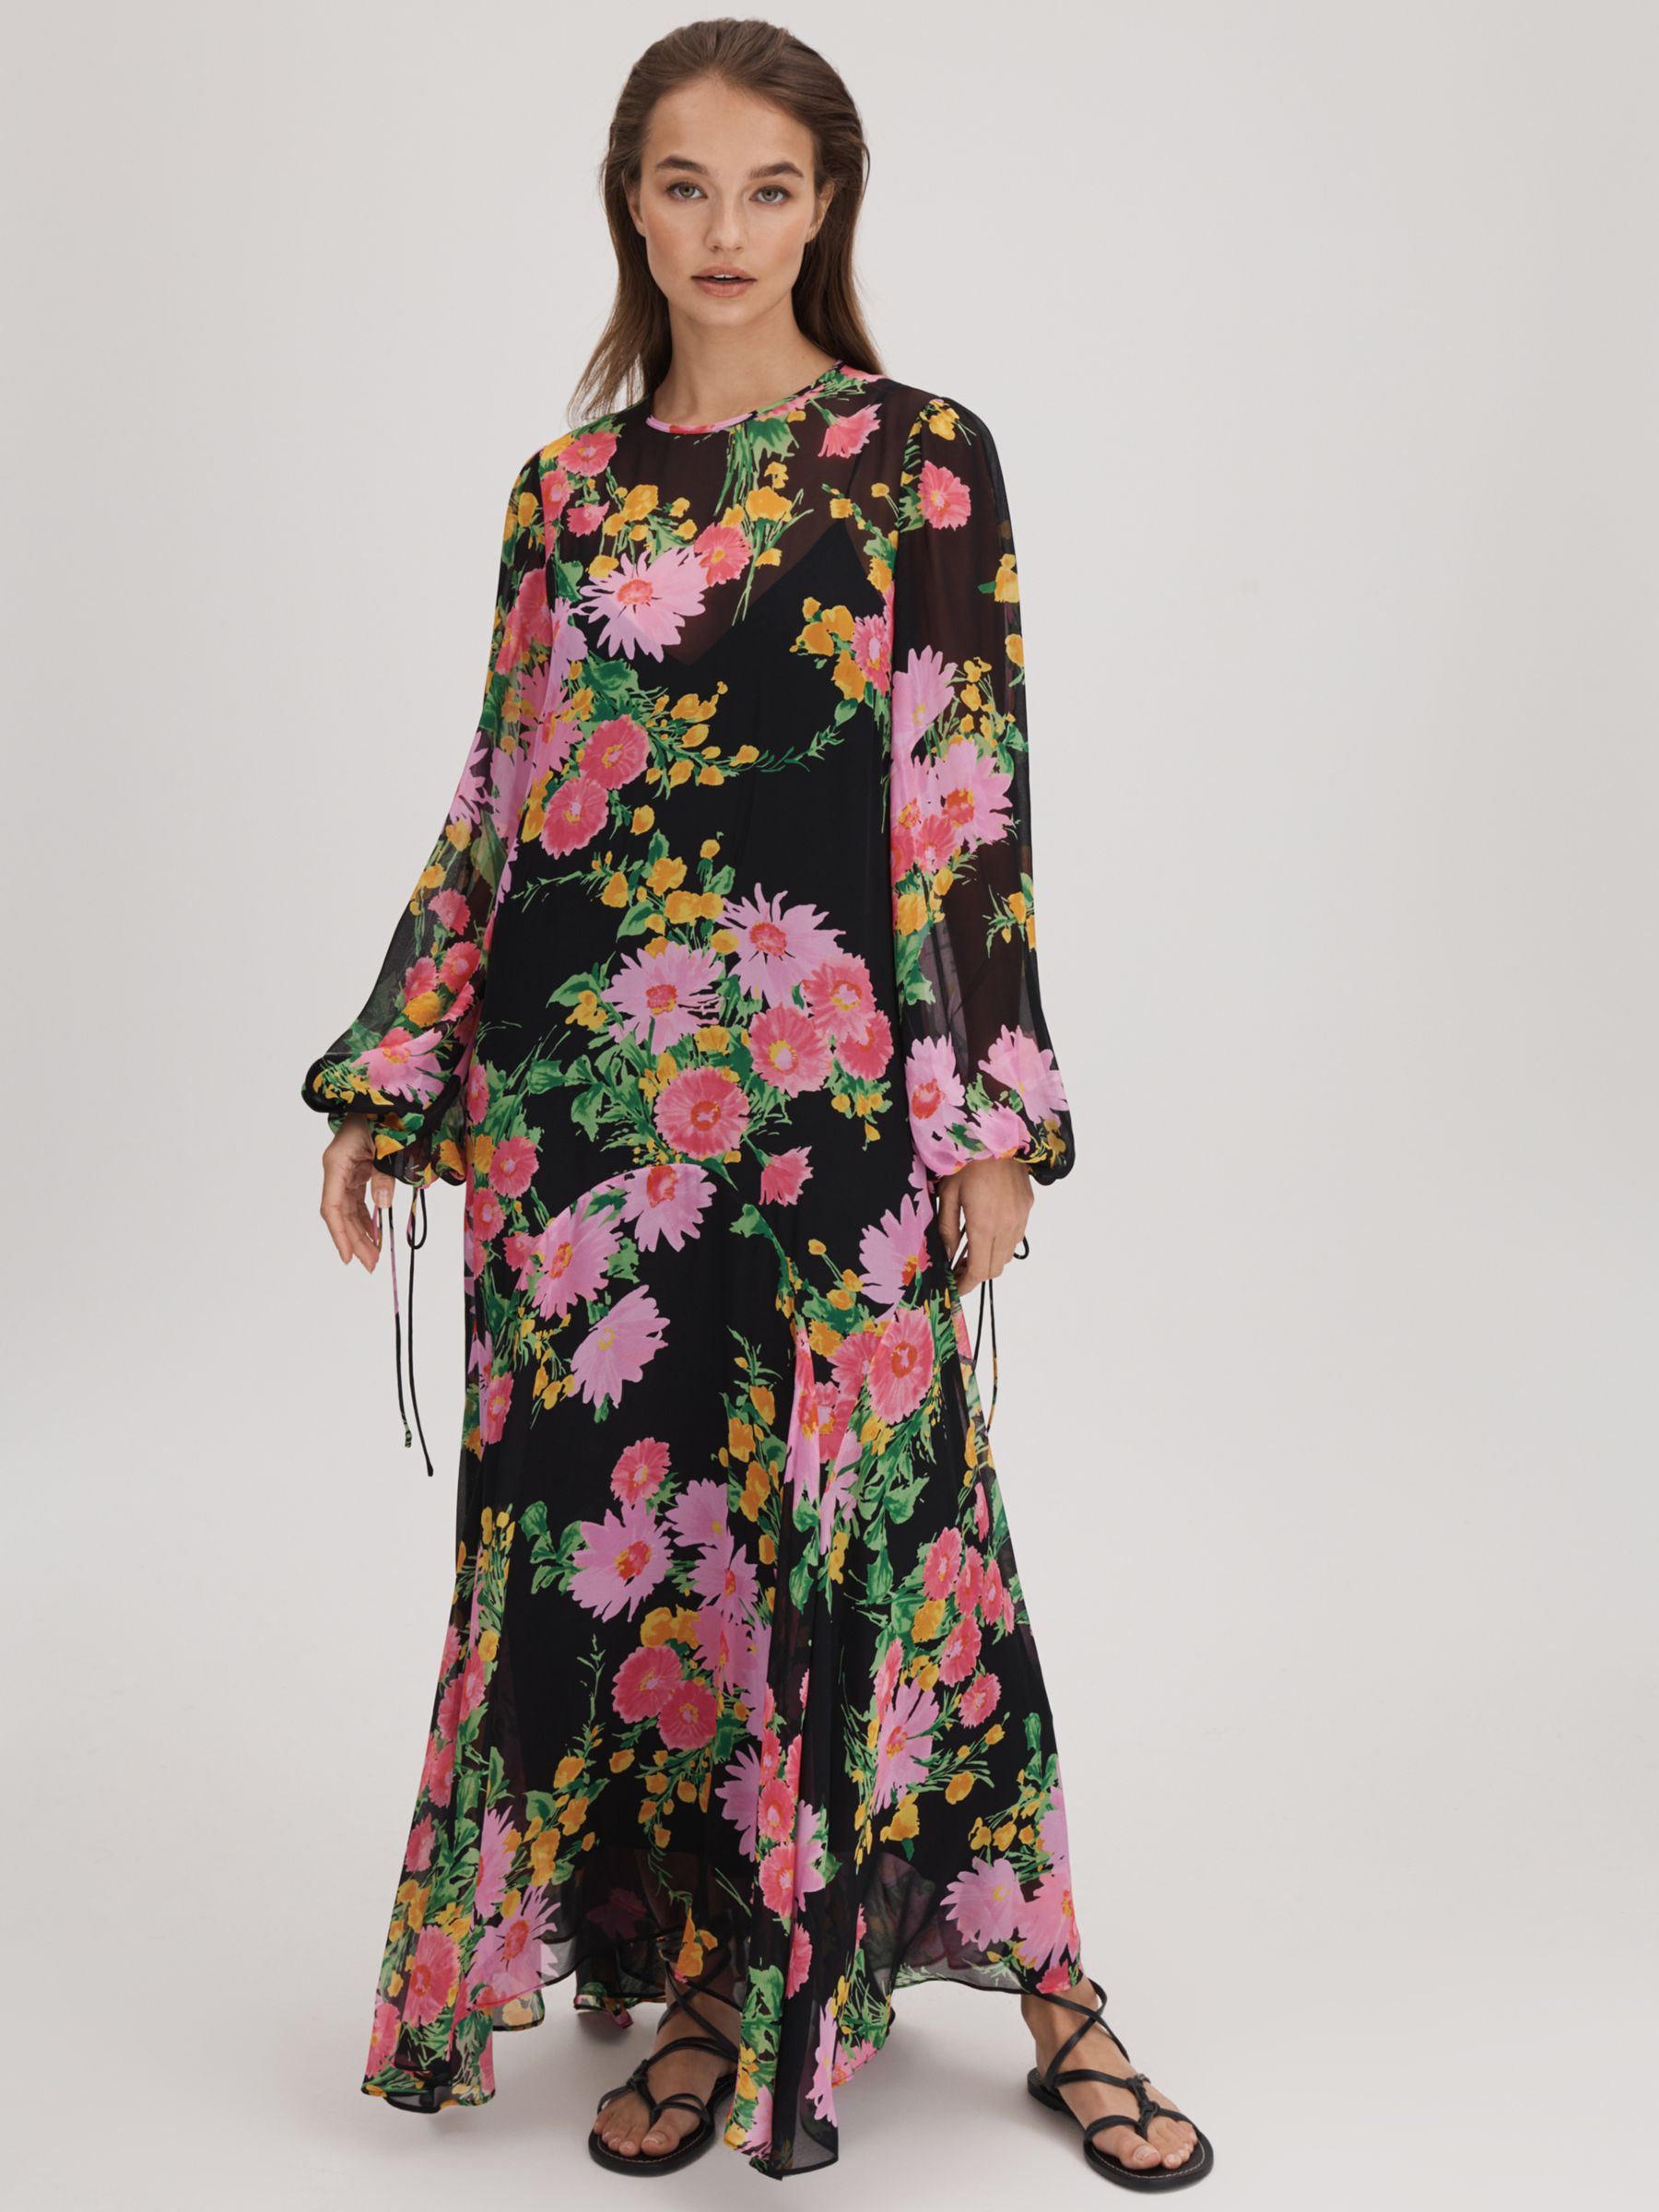 FLORERE Sheer Asymmetric Maxi Dress, Pink/Black, 8